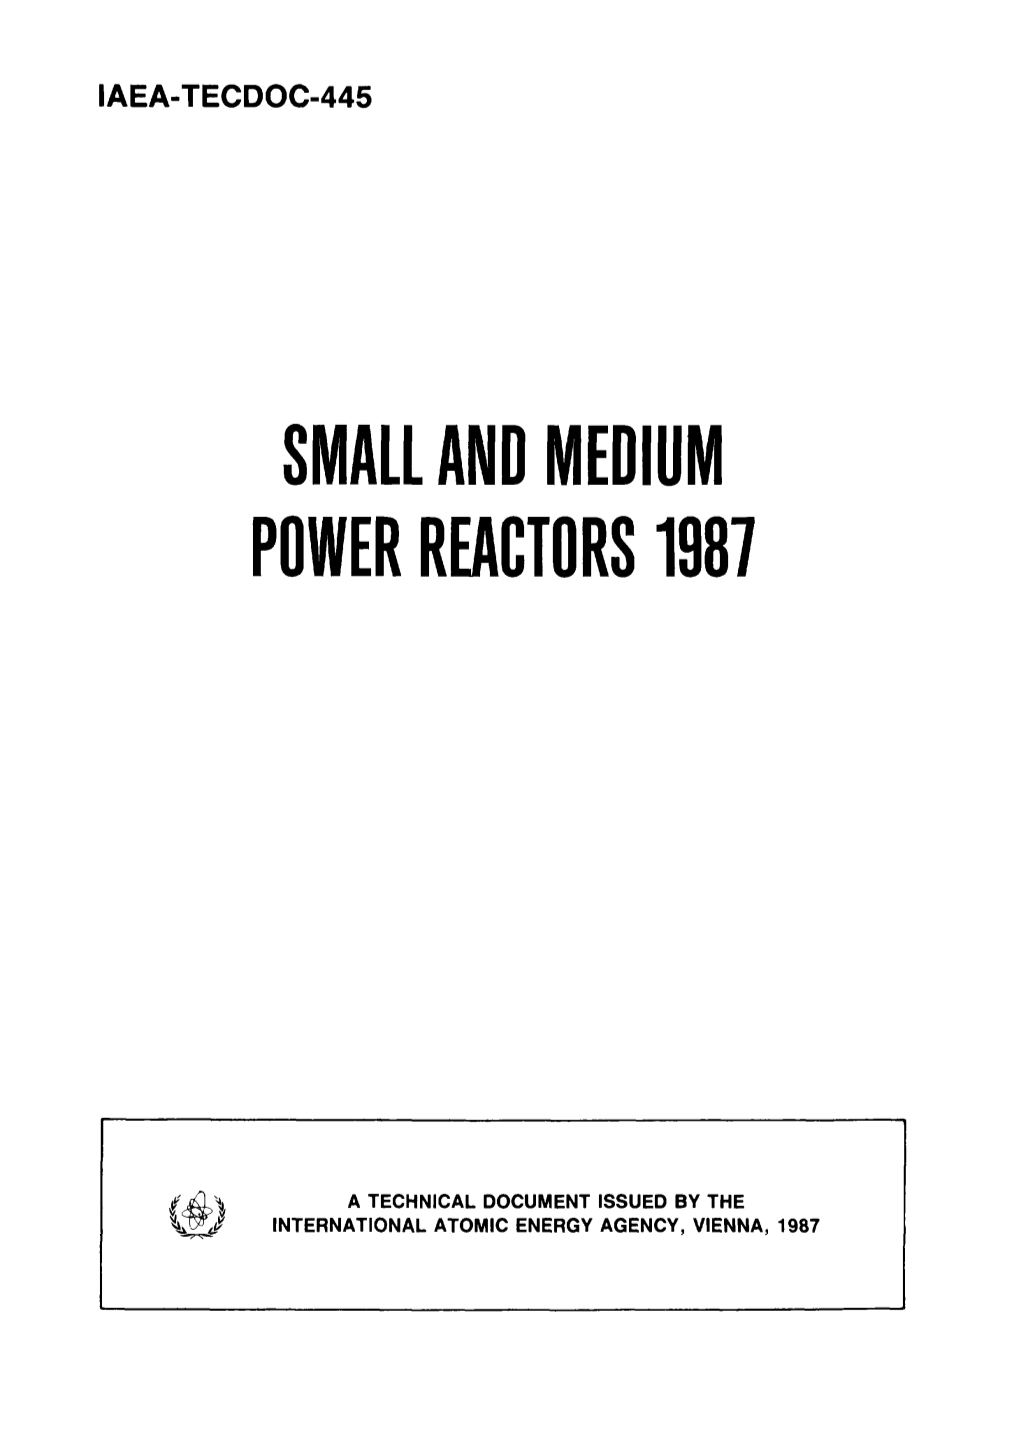 Small and Medium Power Reactors 1987